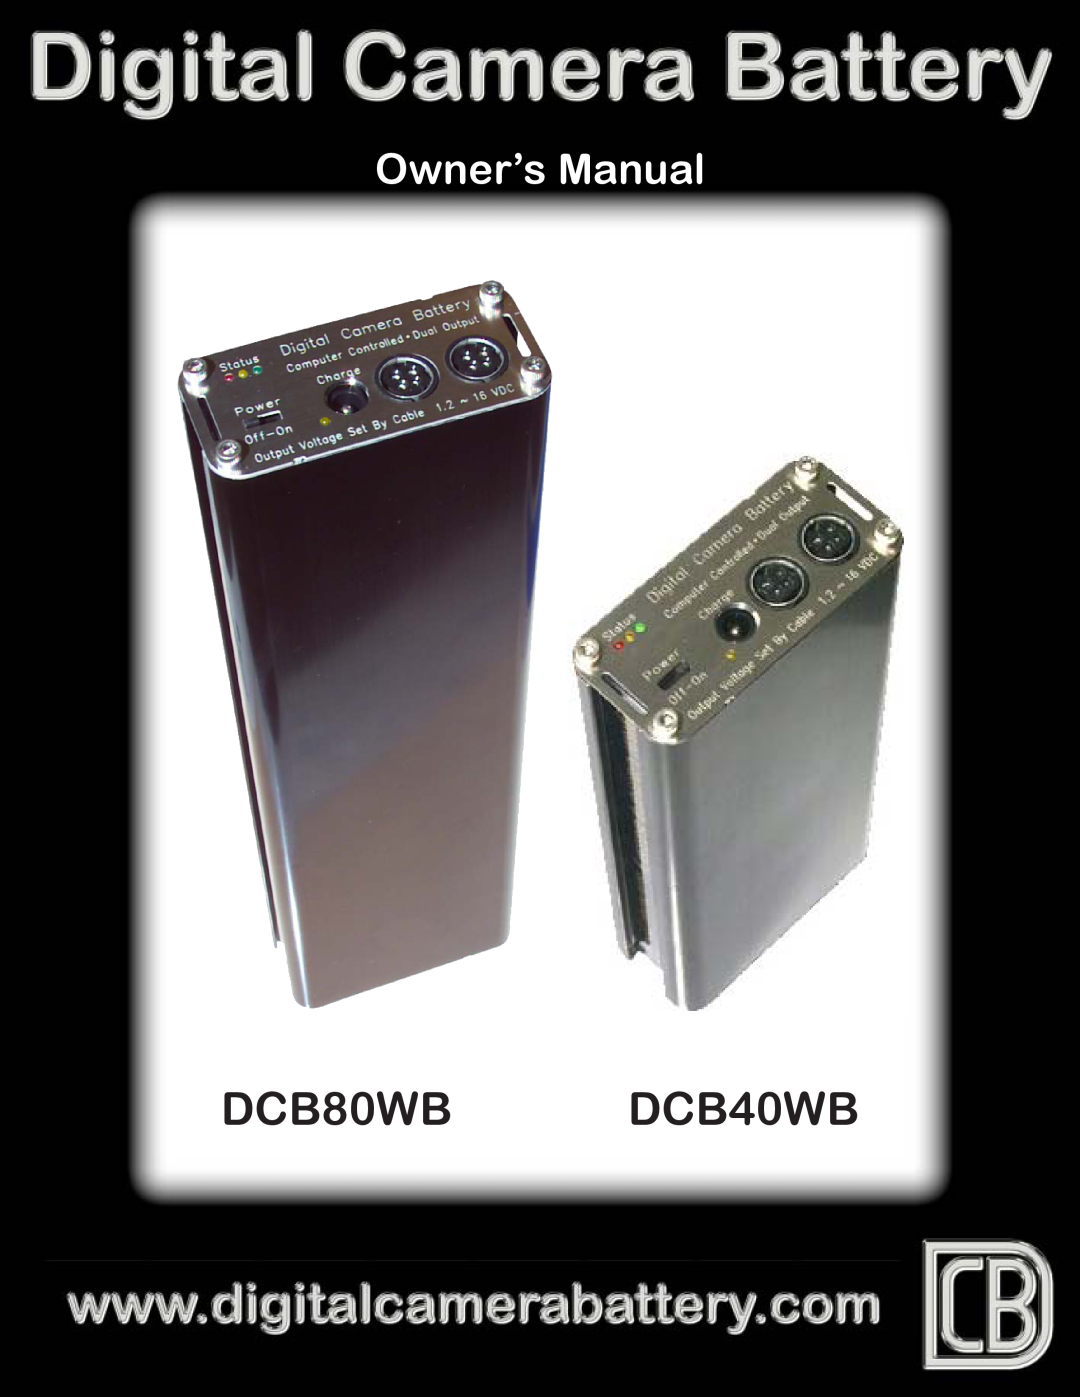 Digital Camera Battery manual Page, DCB80WB DCB40WB, Owner’s Manual 